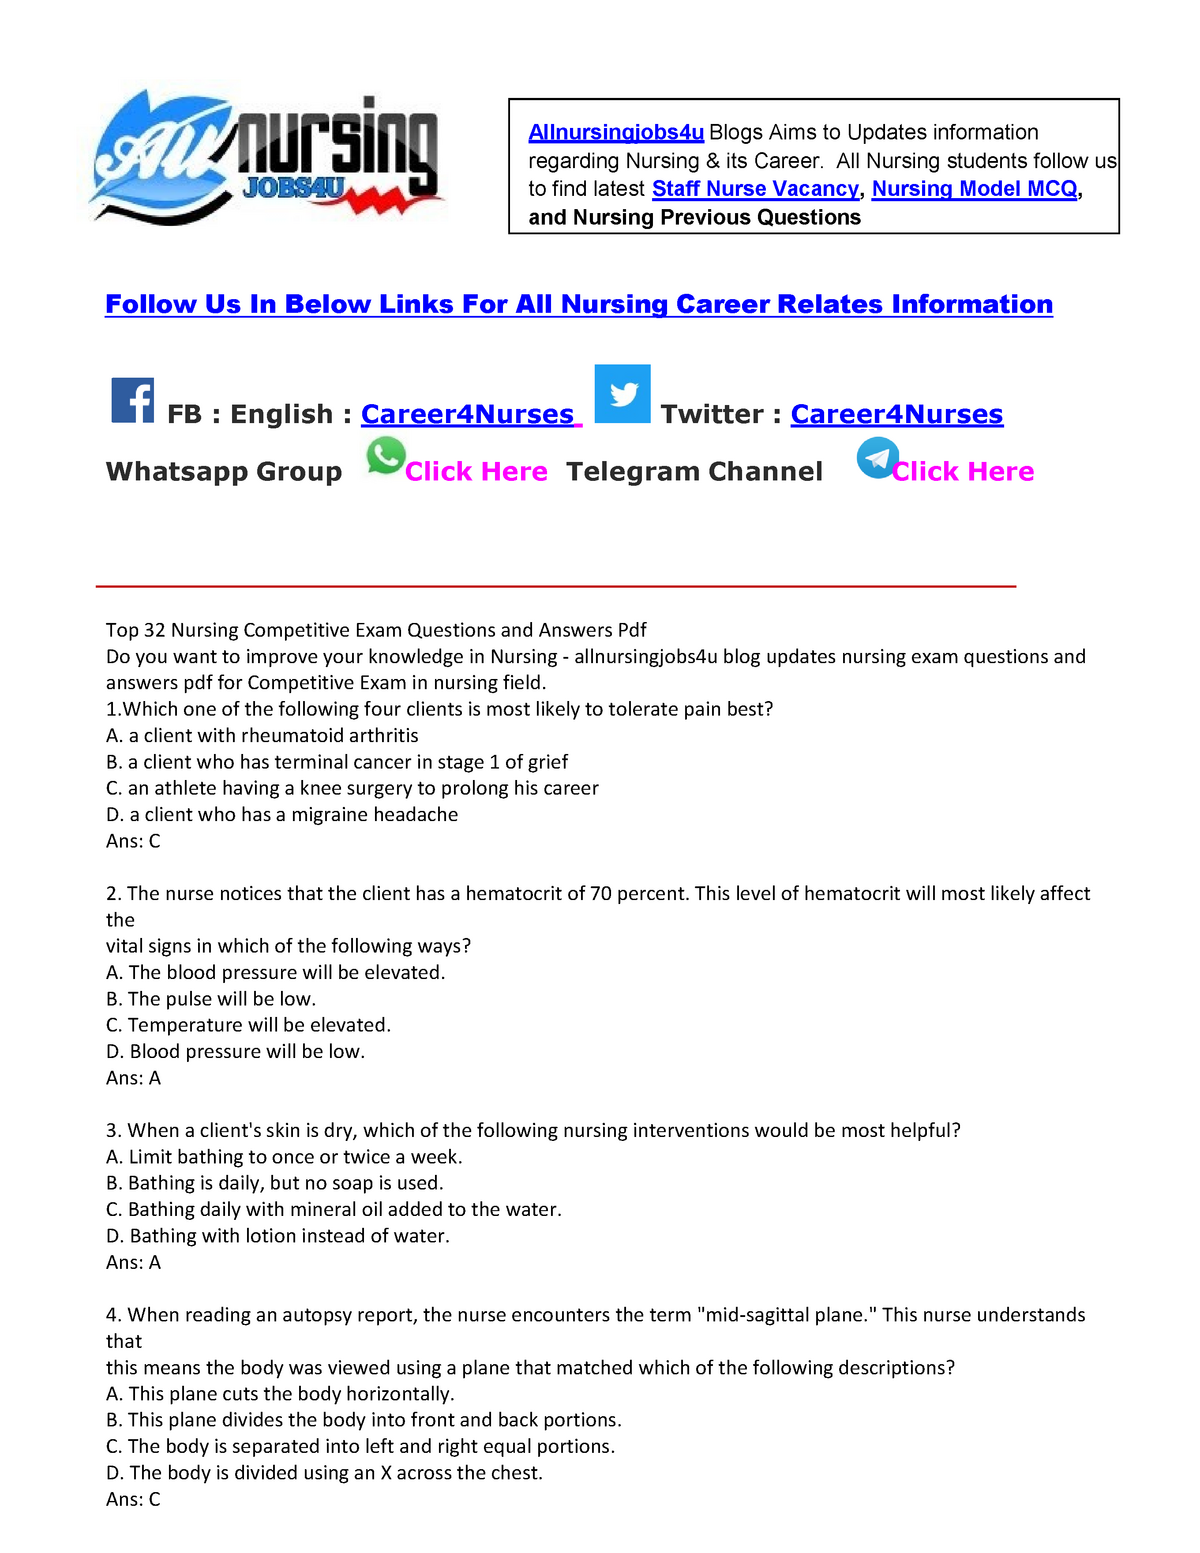 Nursing exam questions and answers pdf Allnursingjobs4u Blogs Aims to